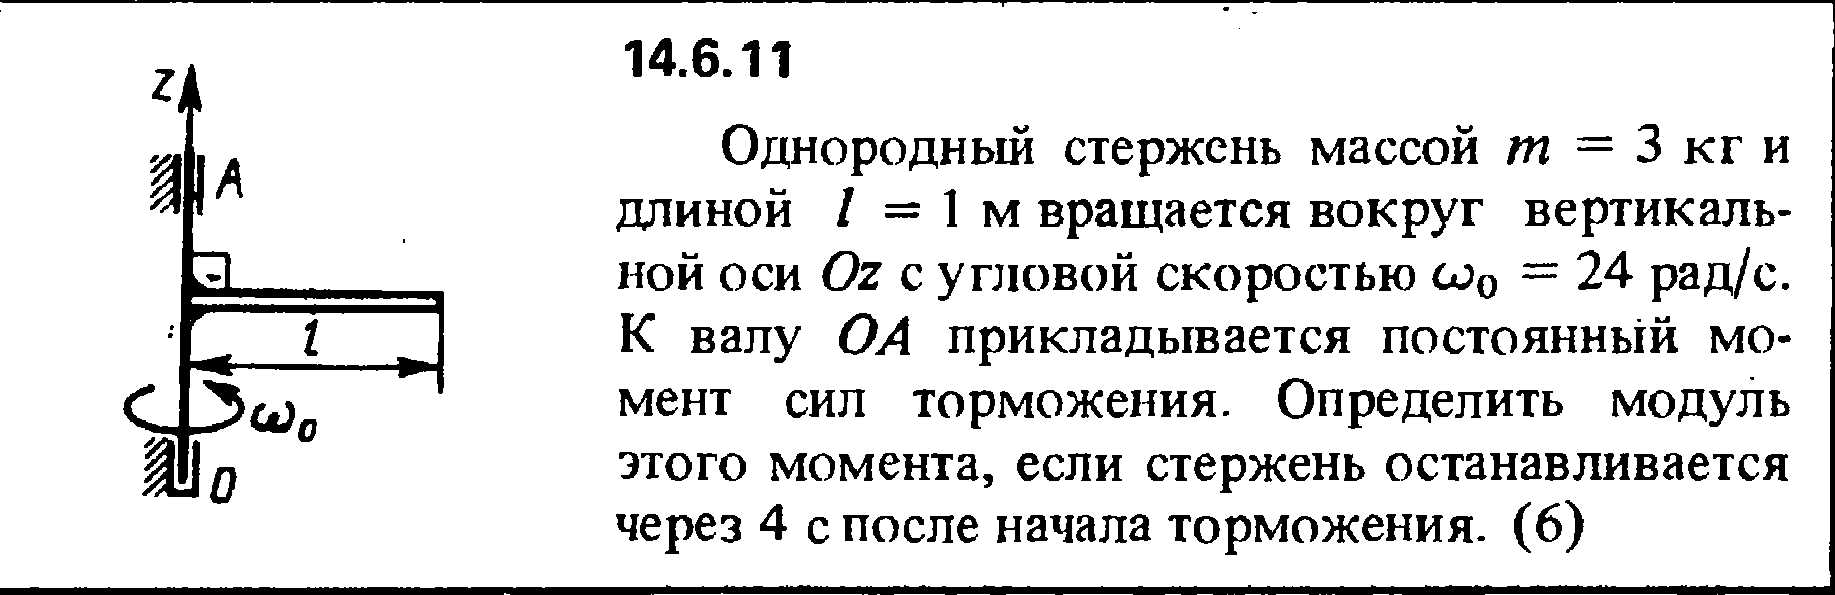 Решение задачи 14.6.11 из сборника Кепе О.Е. 1989 года